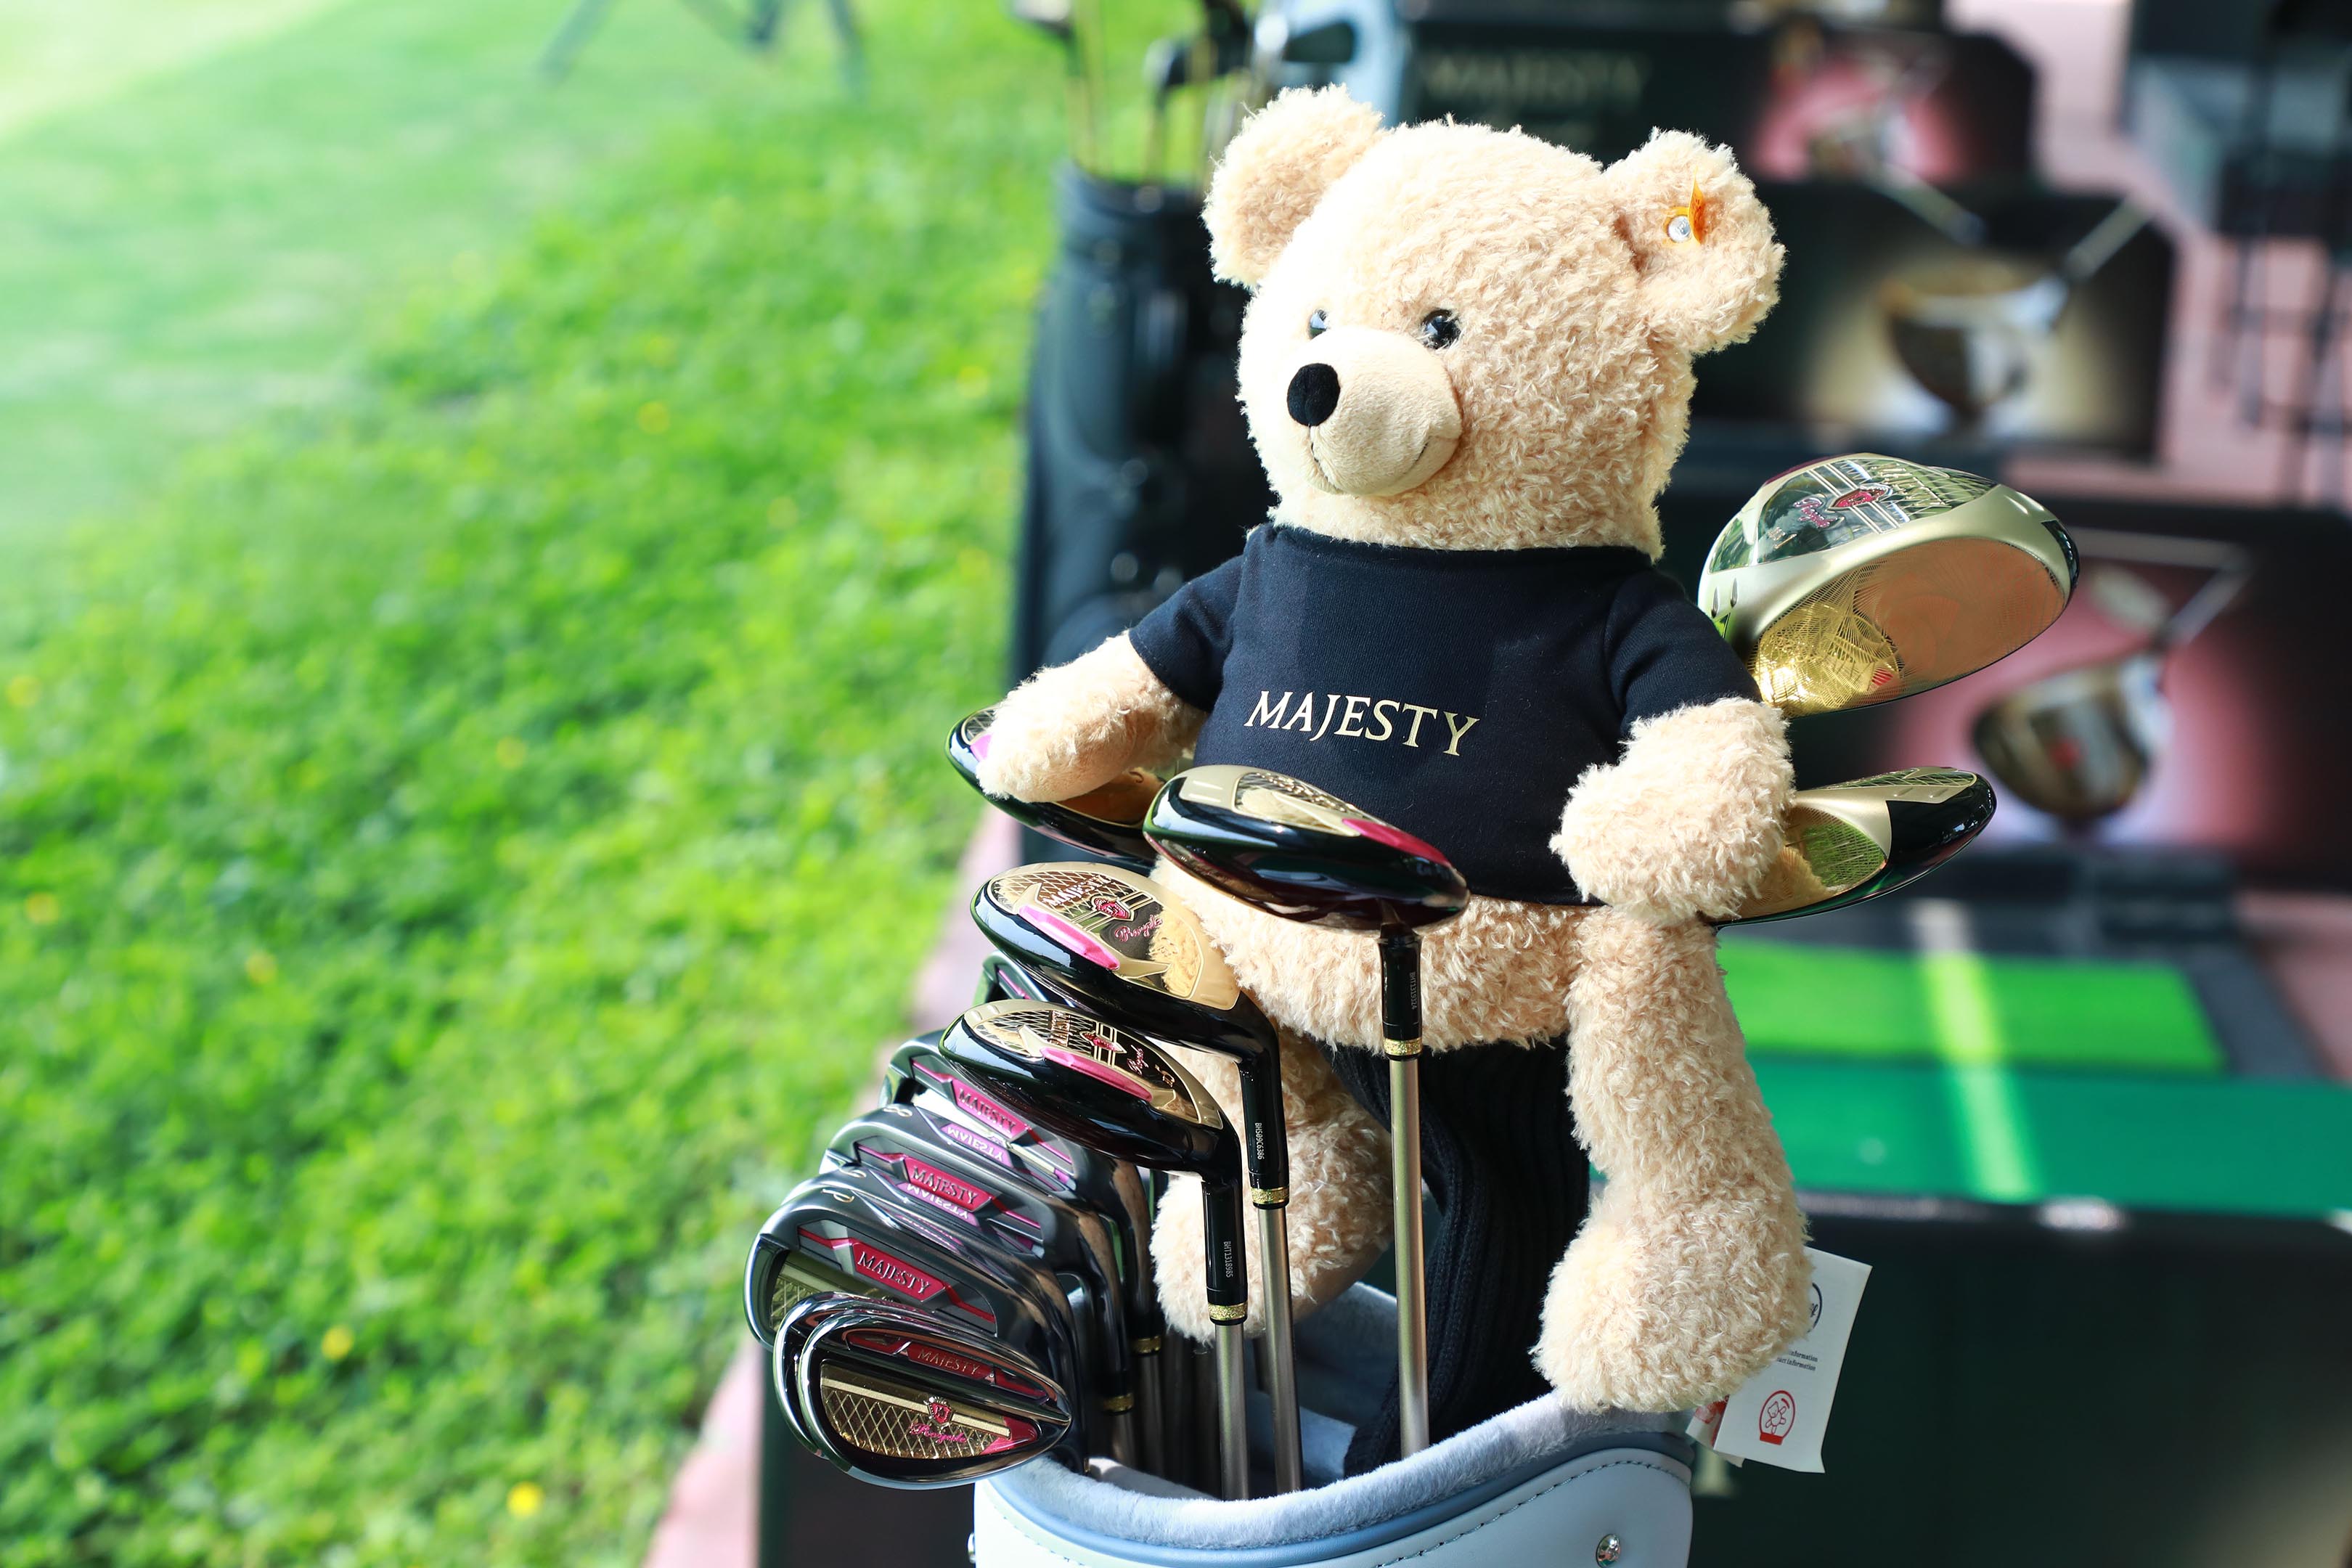 majesty與德國經典金耳扣泰迪熊品牌steiff聯名推出限量泰迪熊桿套，購買女用球桿整套贈送送完為止。官方提供